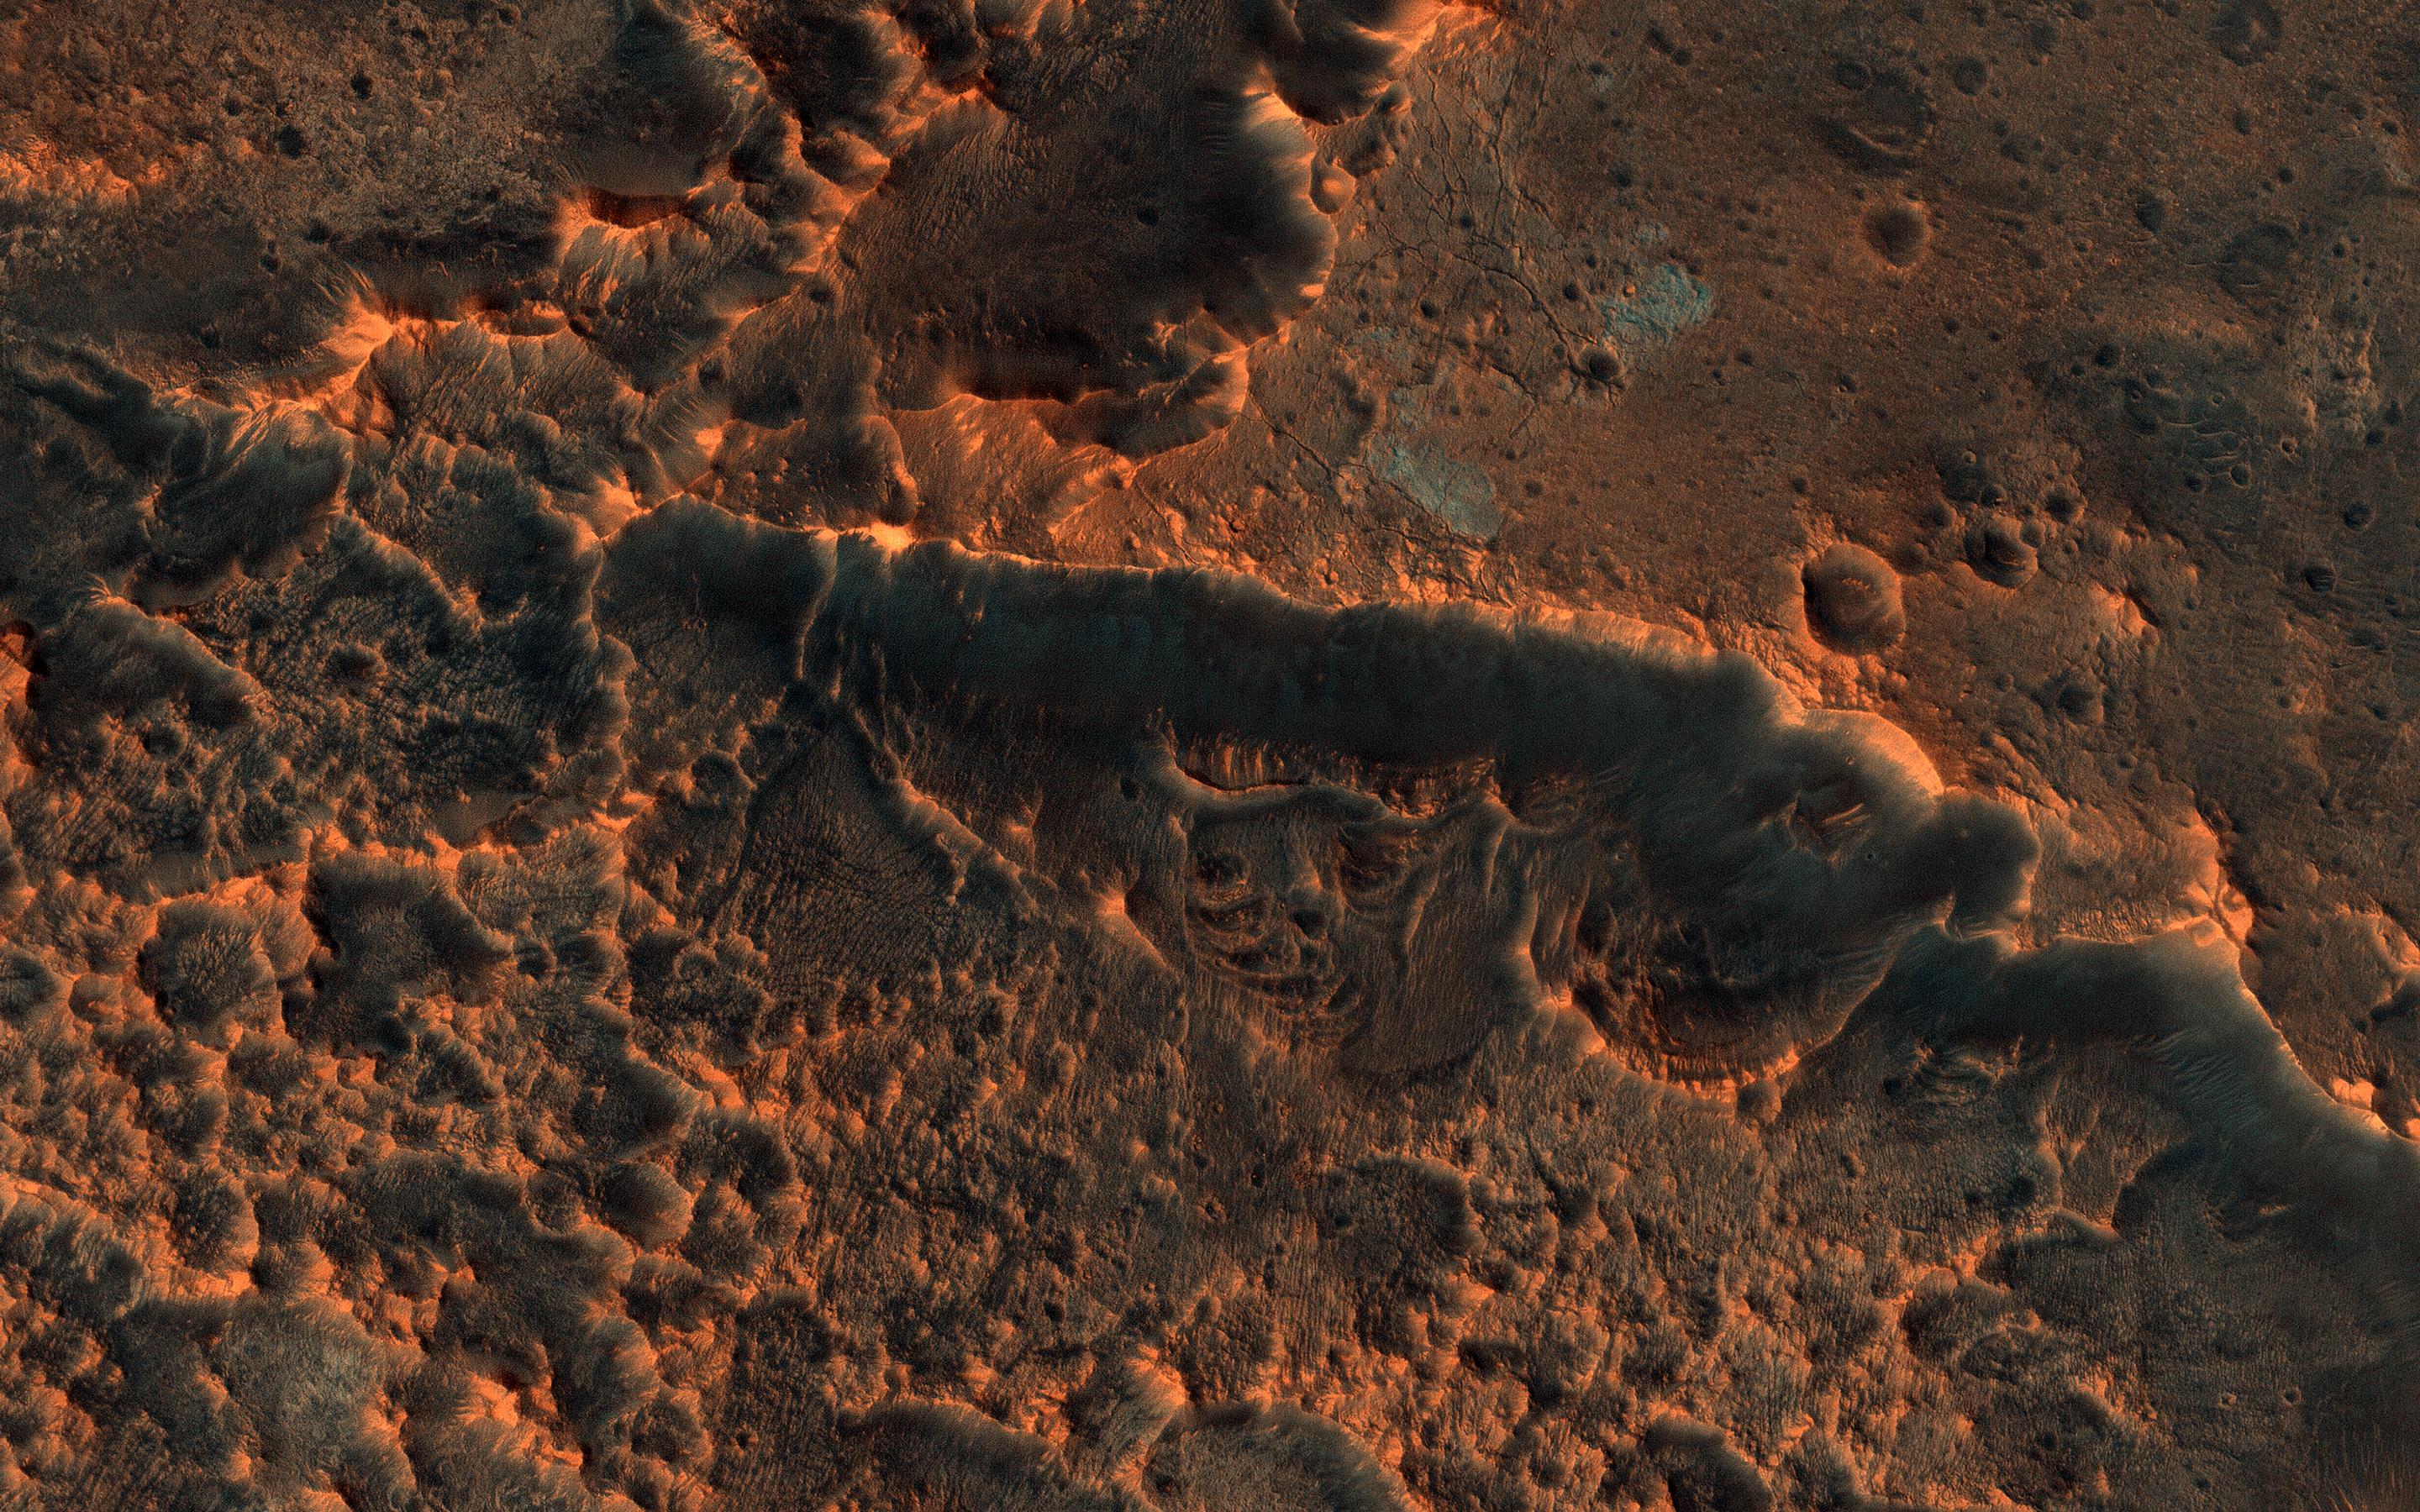 The Changing Surface Of Mars Nasa Mars Exploration